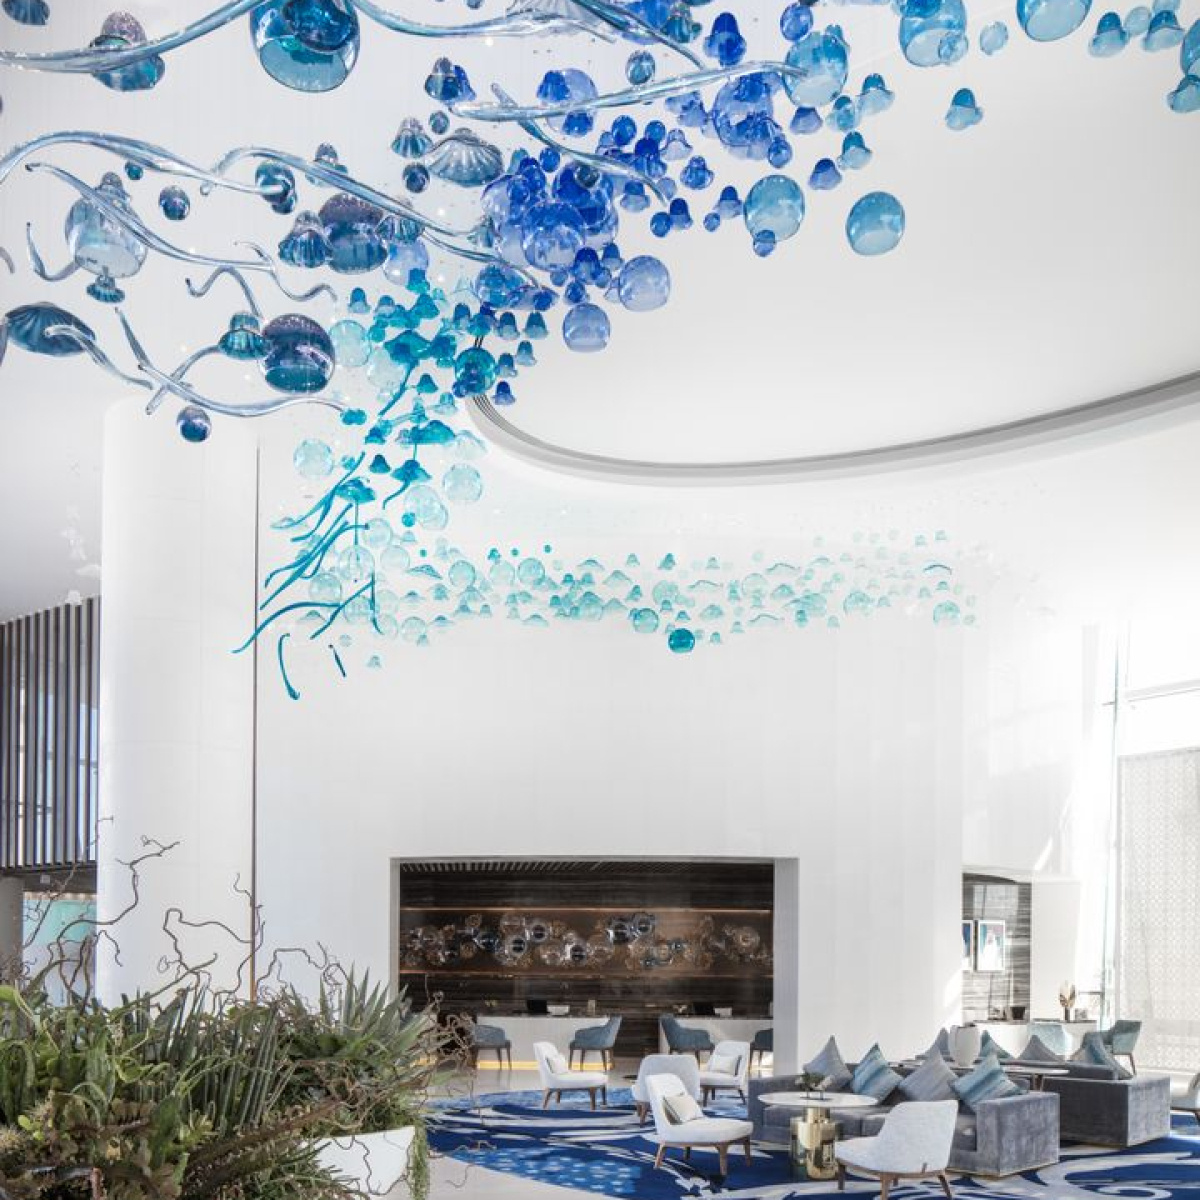 Main lobby with hand-blown glass jellyfish